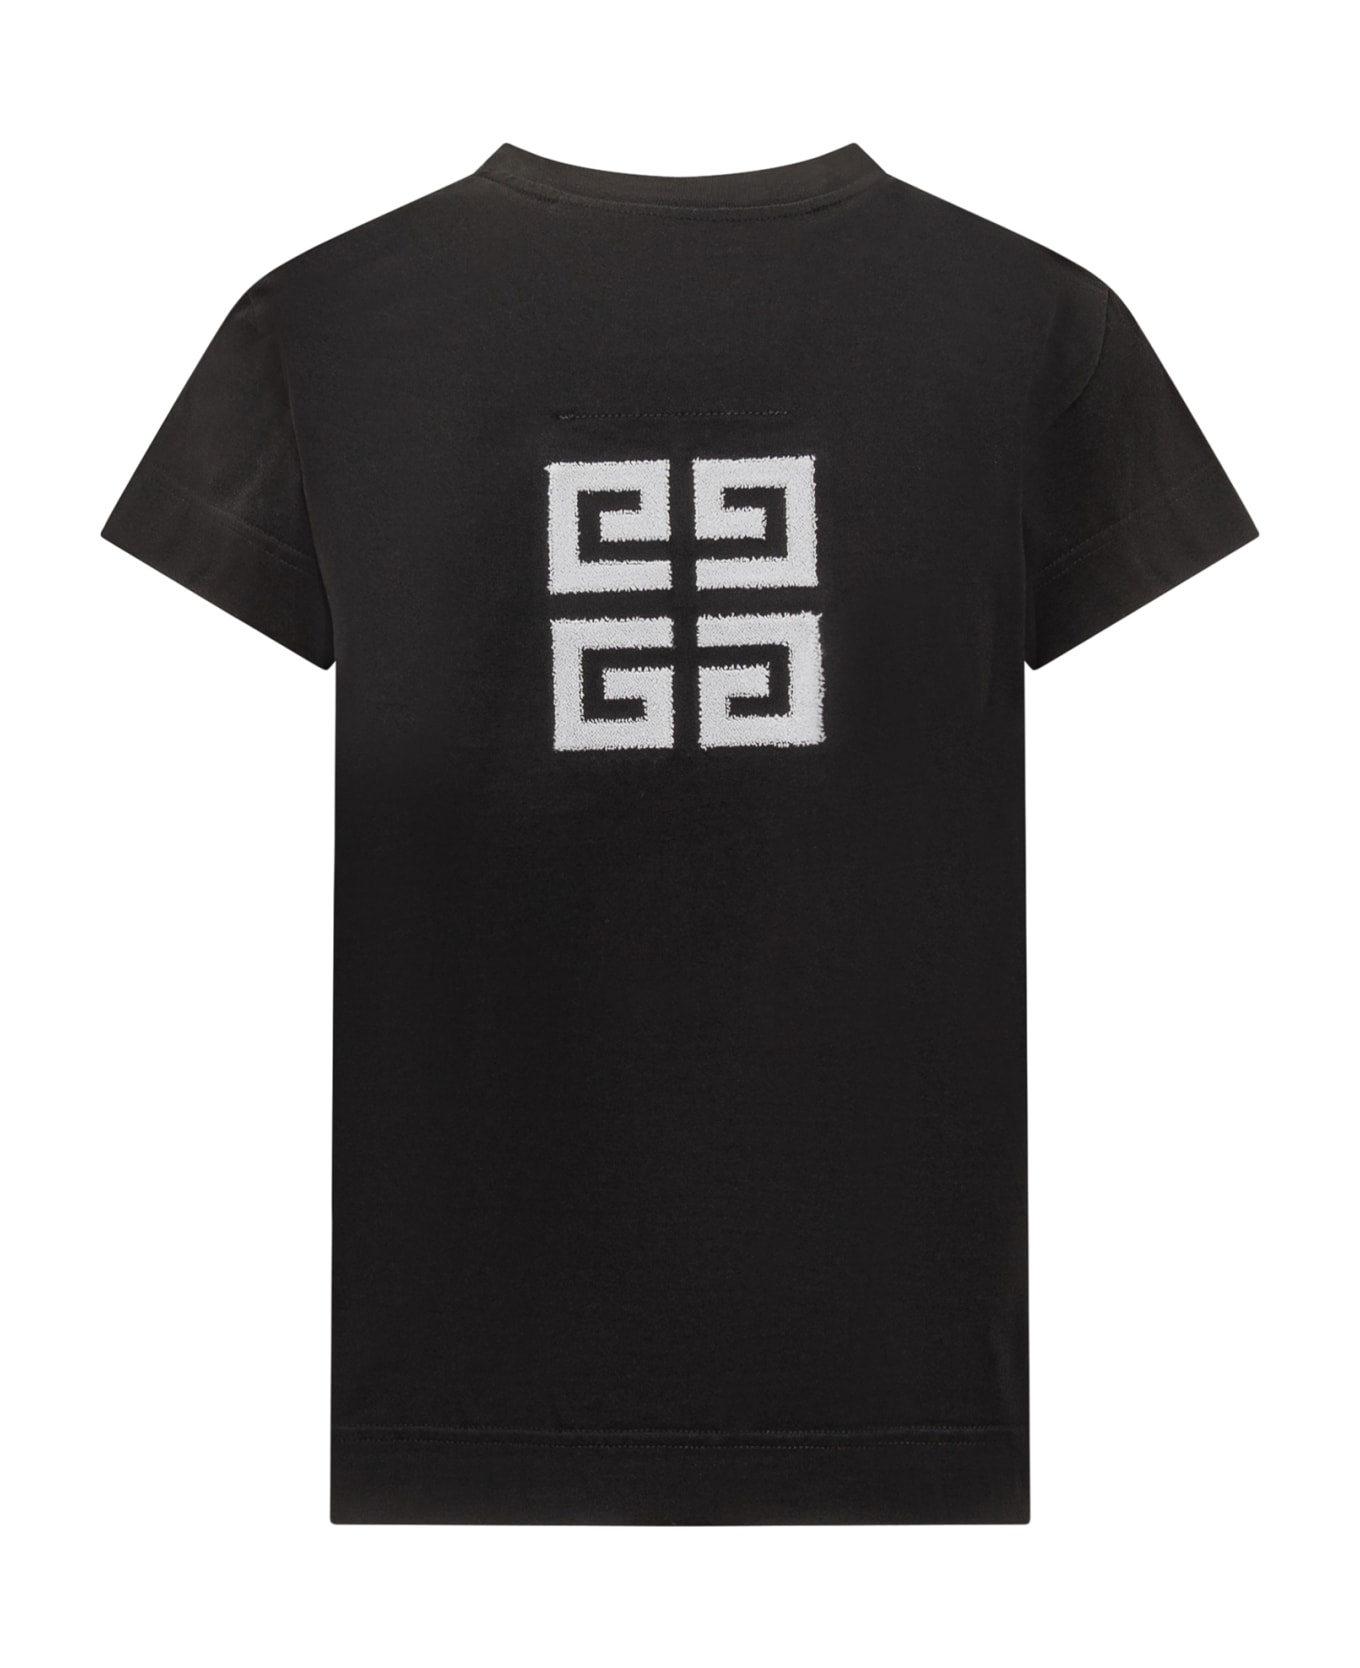 Givenchy 4g Tufting Cotton T-shirt. - black Tシャツ